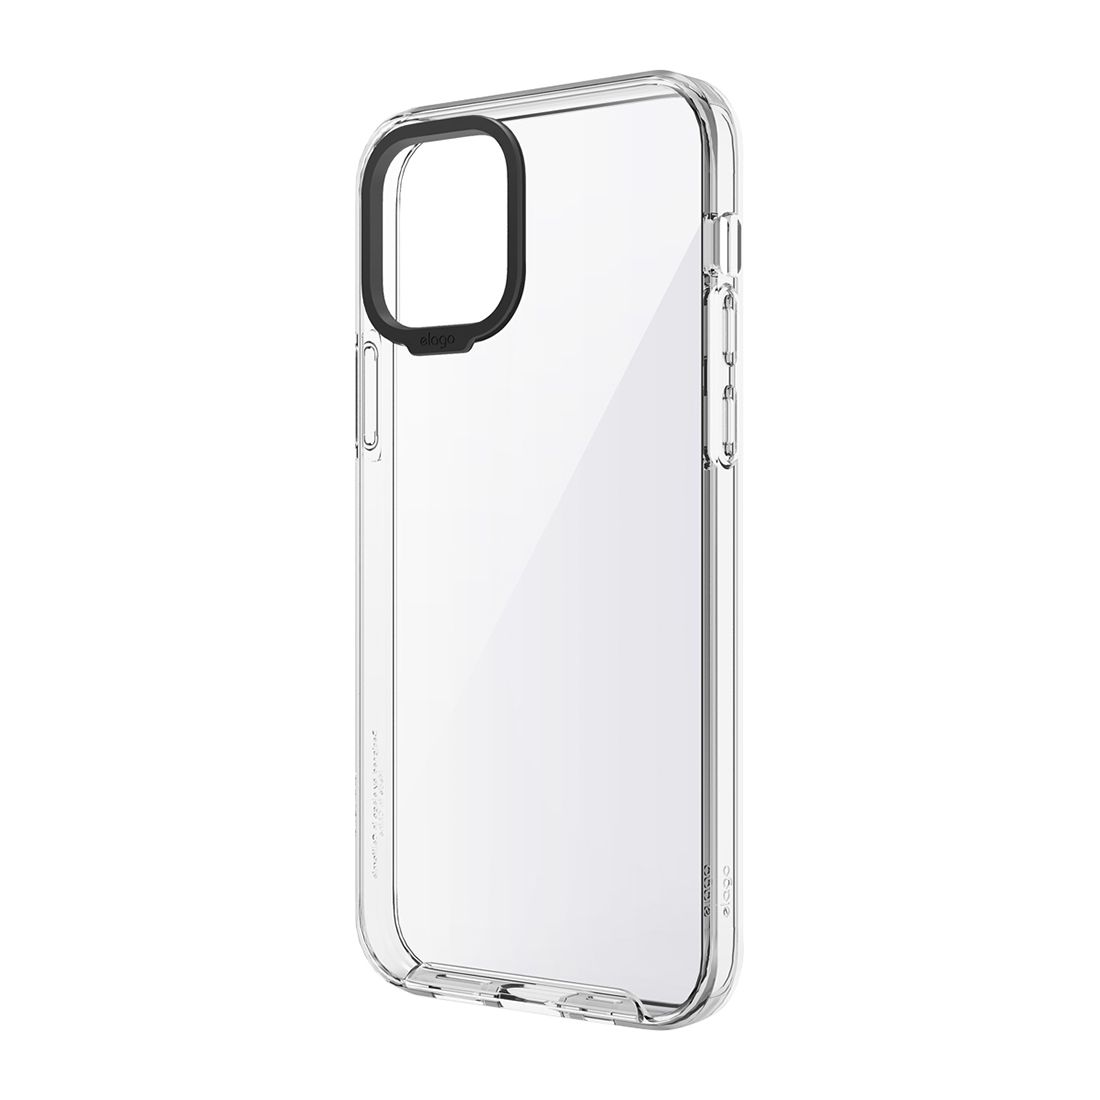 Elago Hybrid Case for iPhone 12 Pro Max Crystal Clear